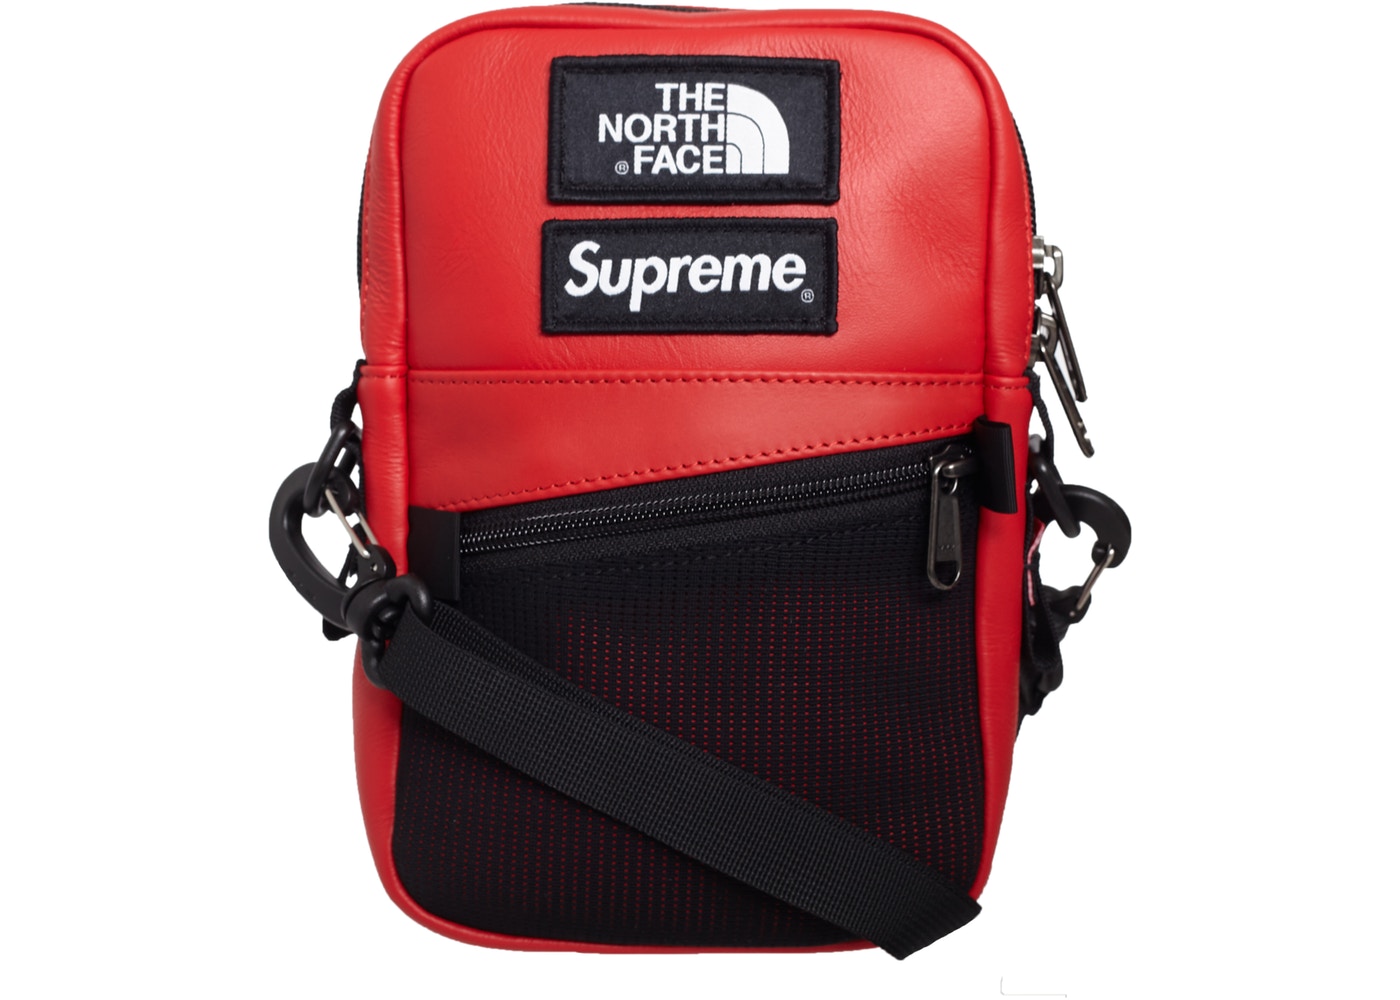 Supreme The North Face Leather Shoulder Bag- Red